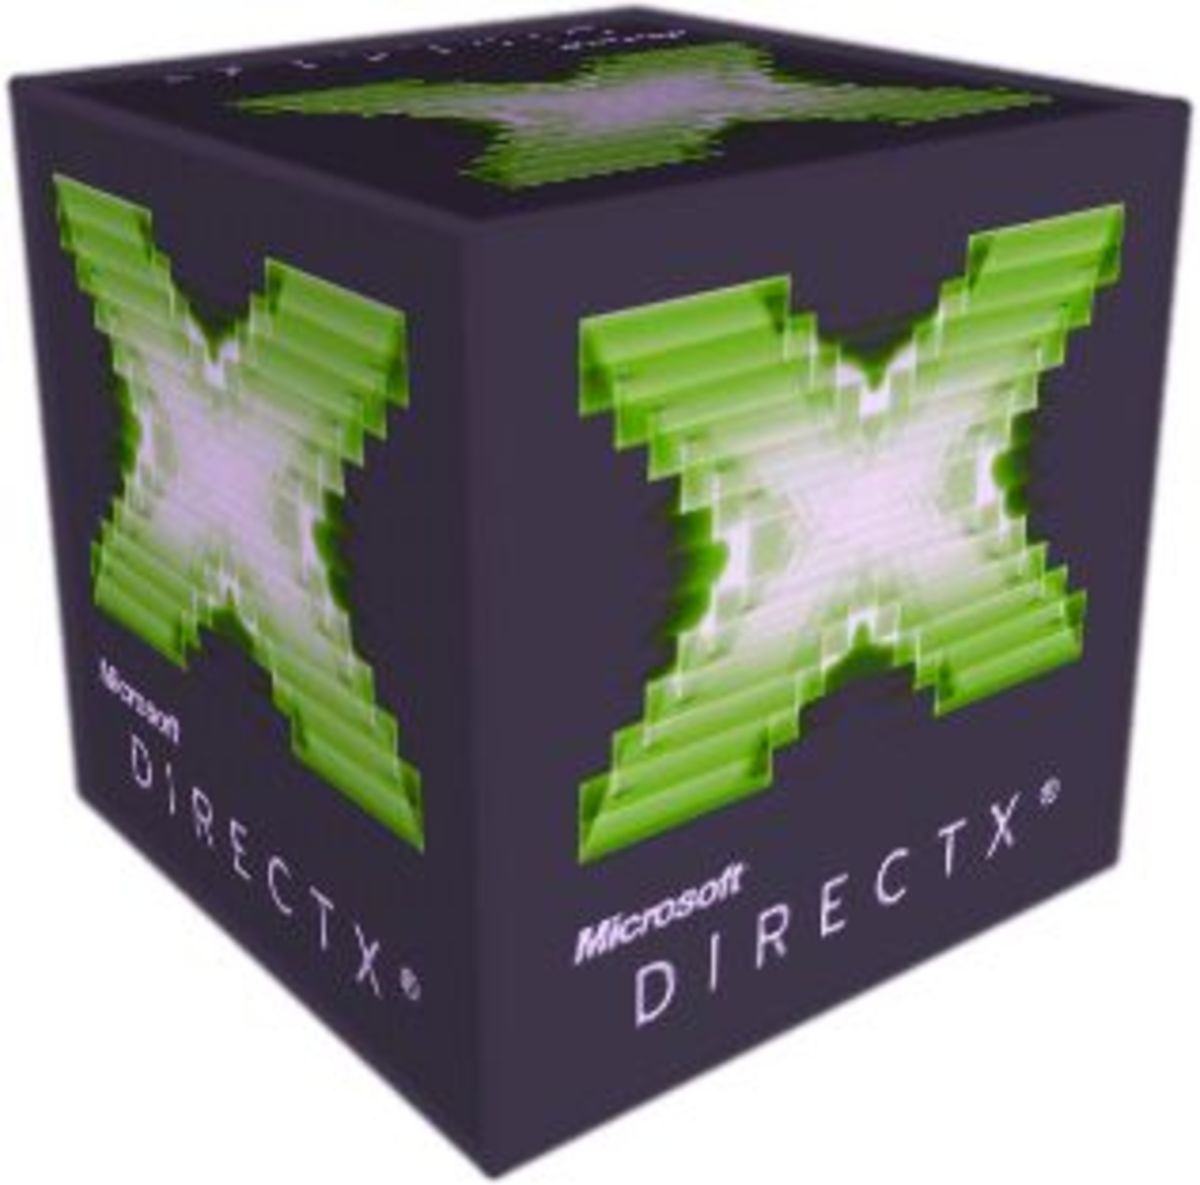 directx-9